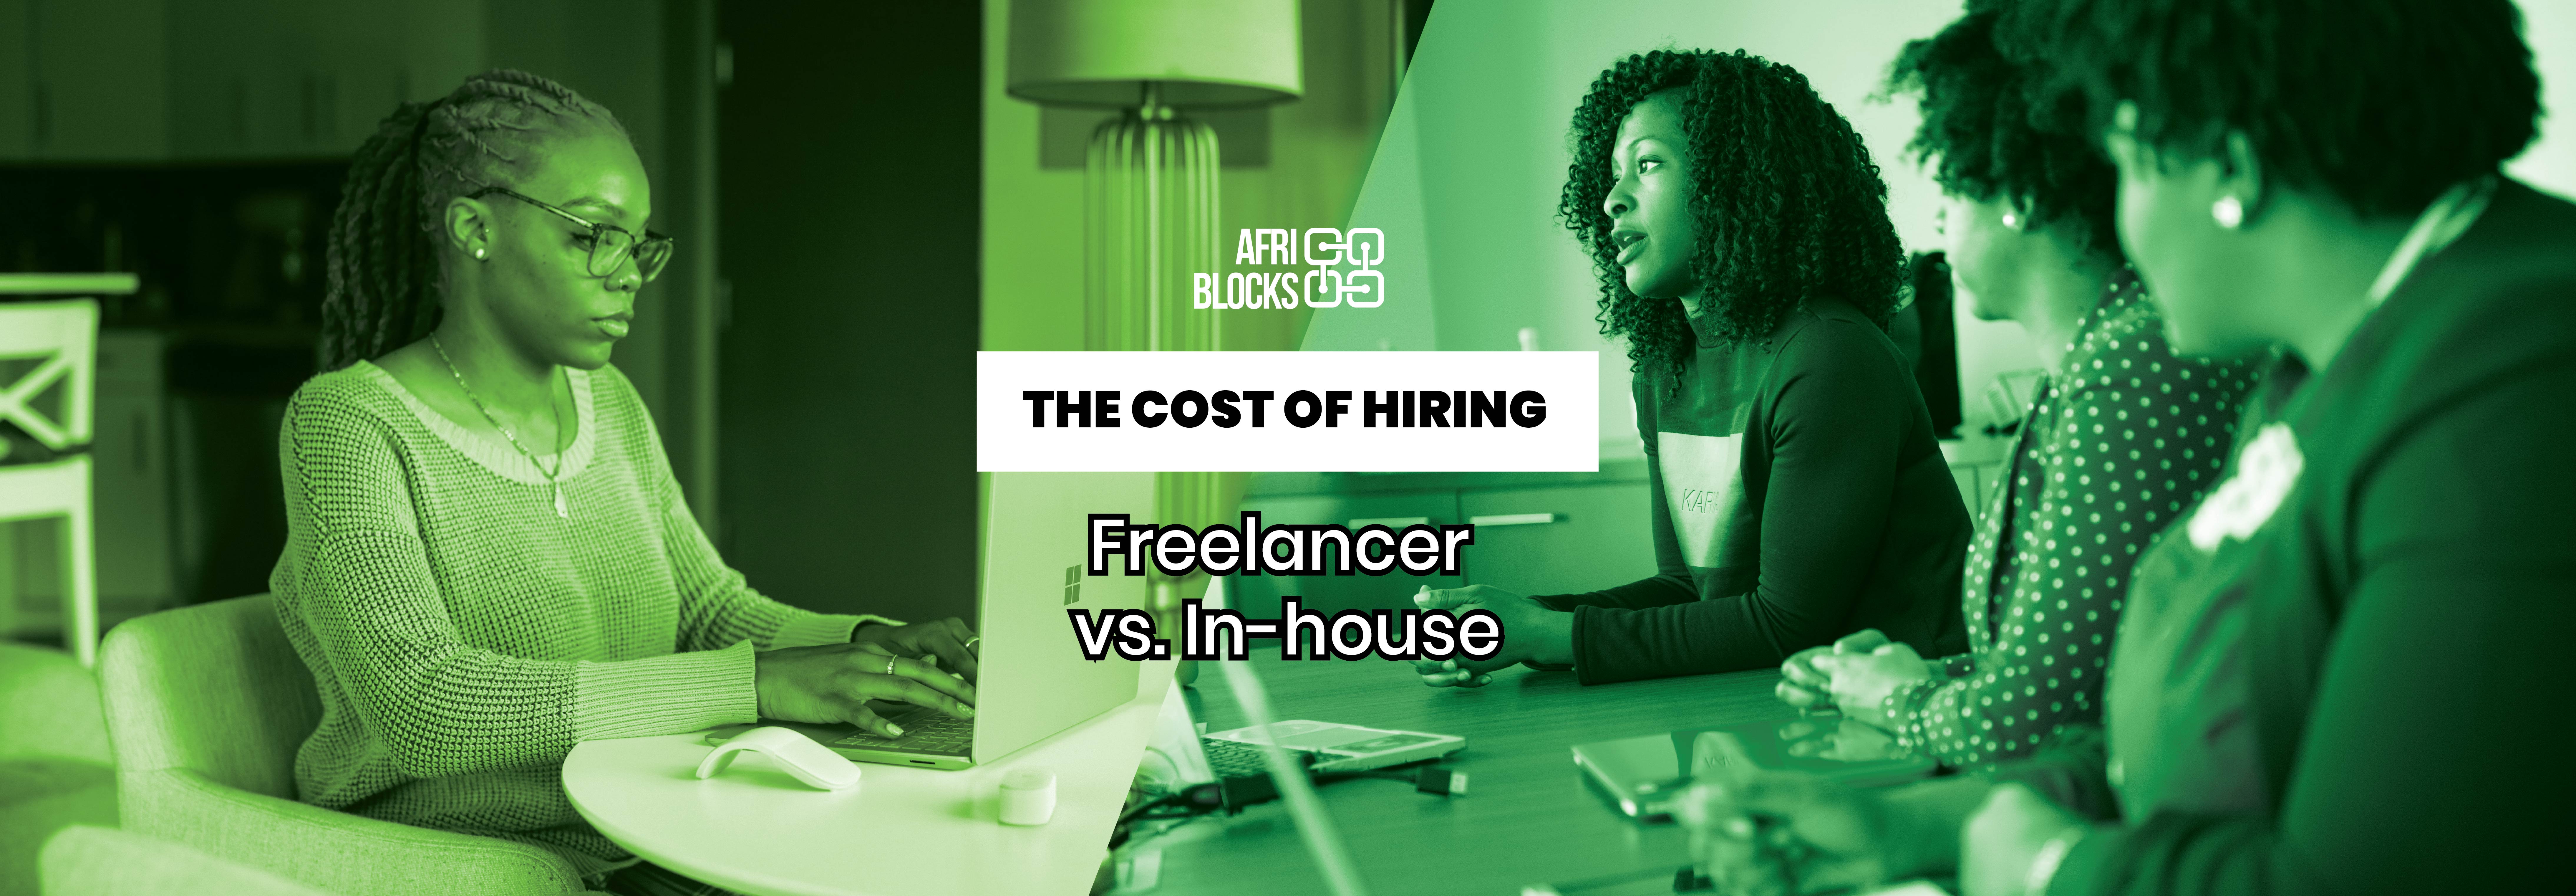 Hiring Permanent Employees vs Freelancers